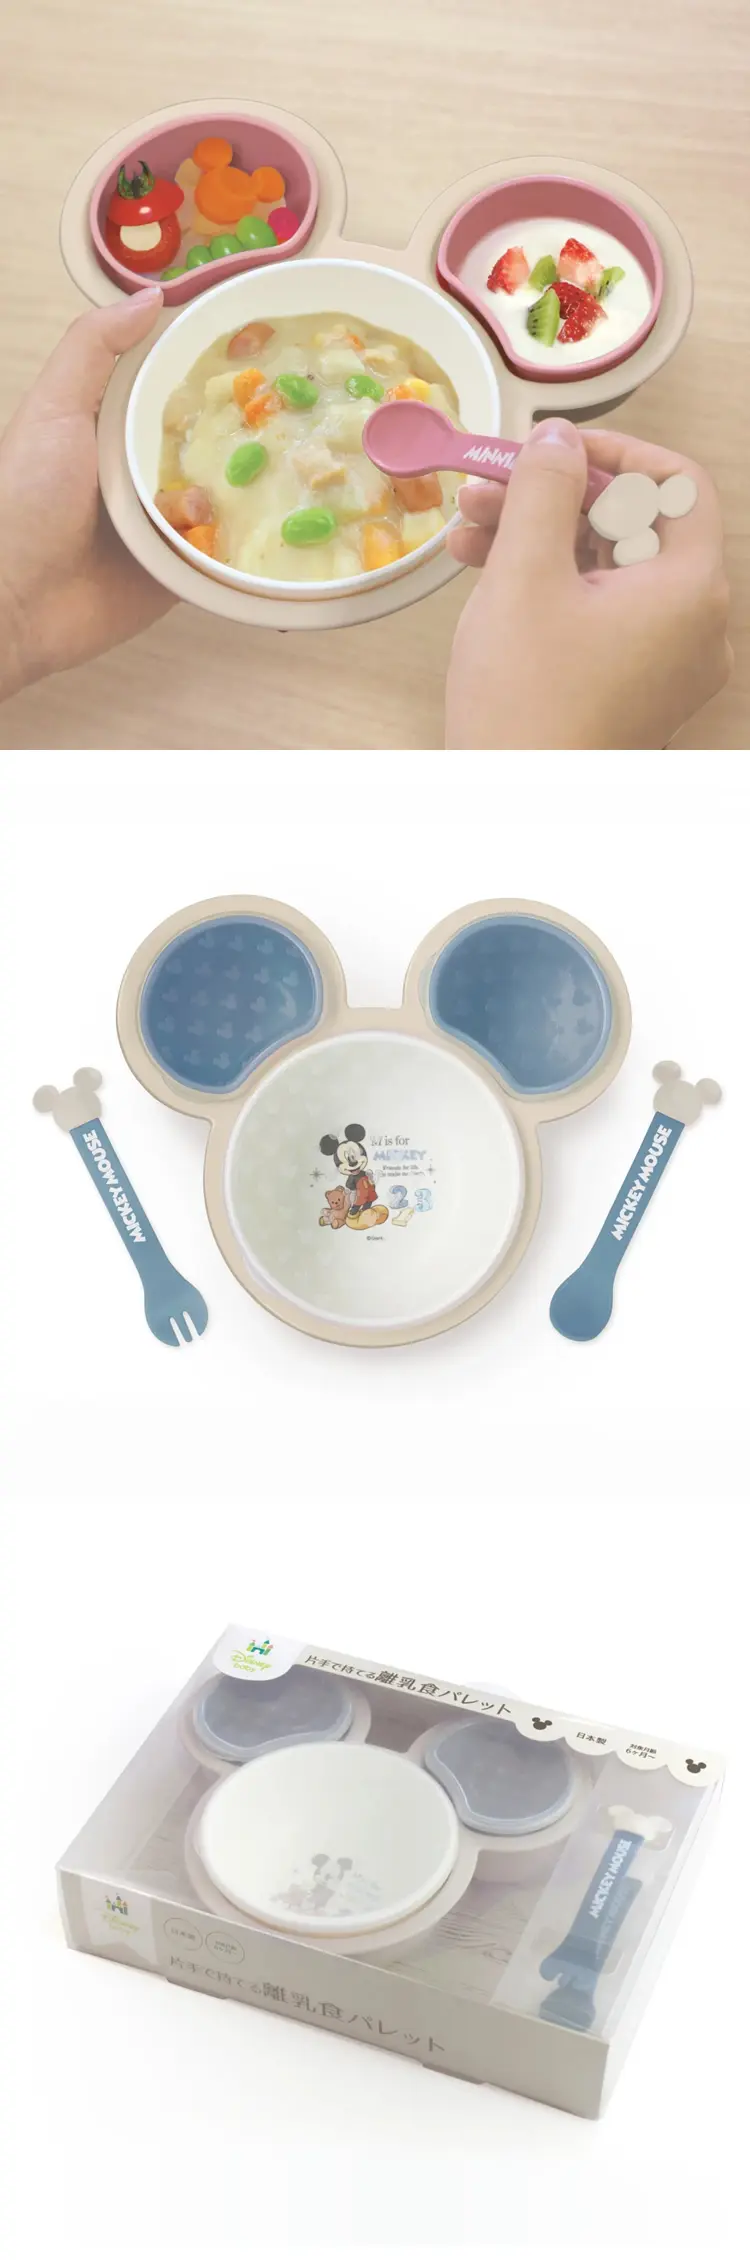 Disney 嬰幼兒餐具套裝 米奇款